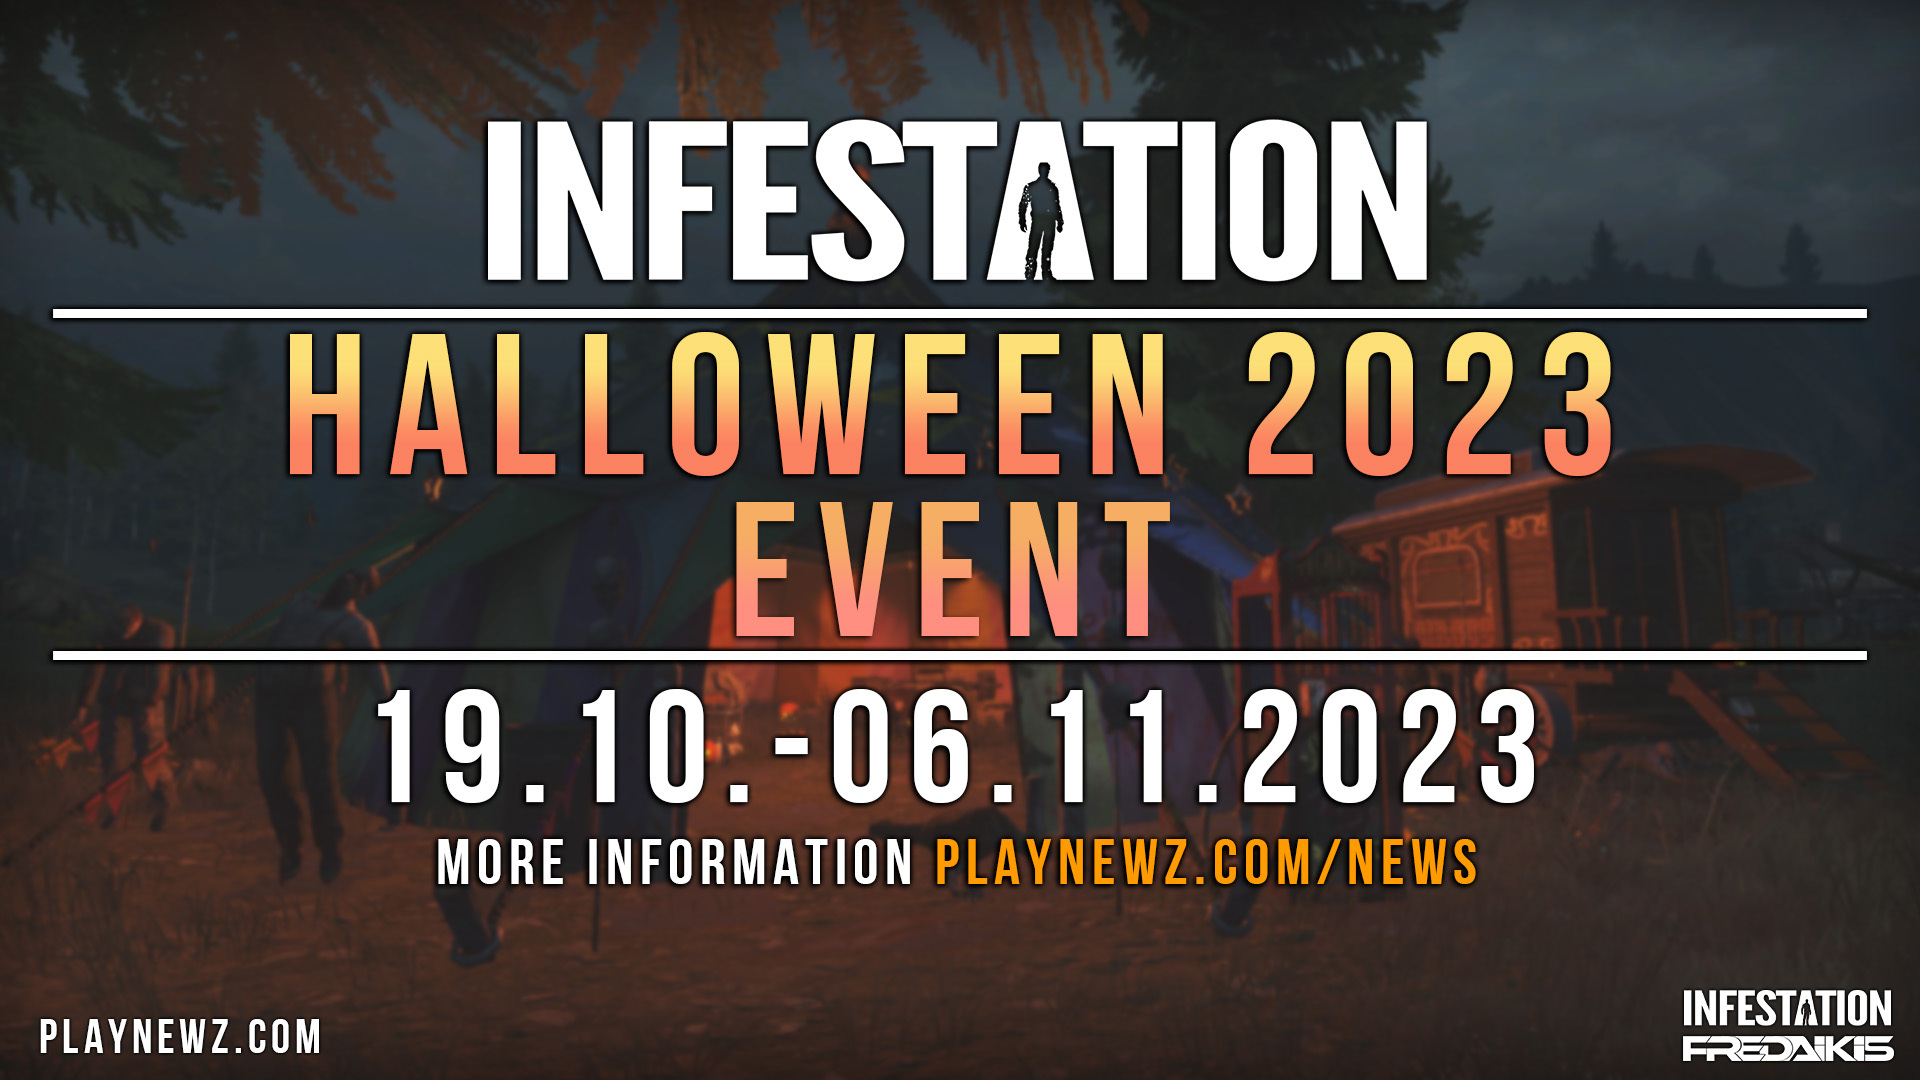 Infestation: The New Z on Steam